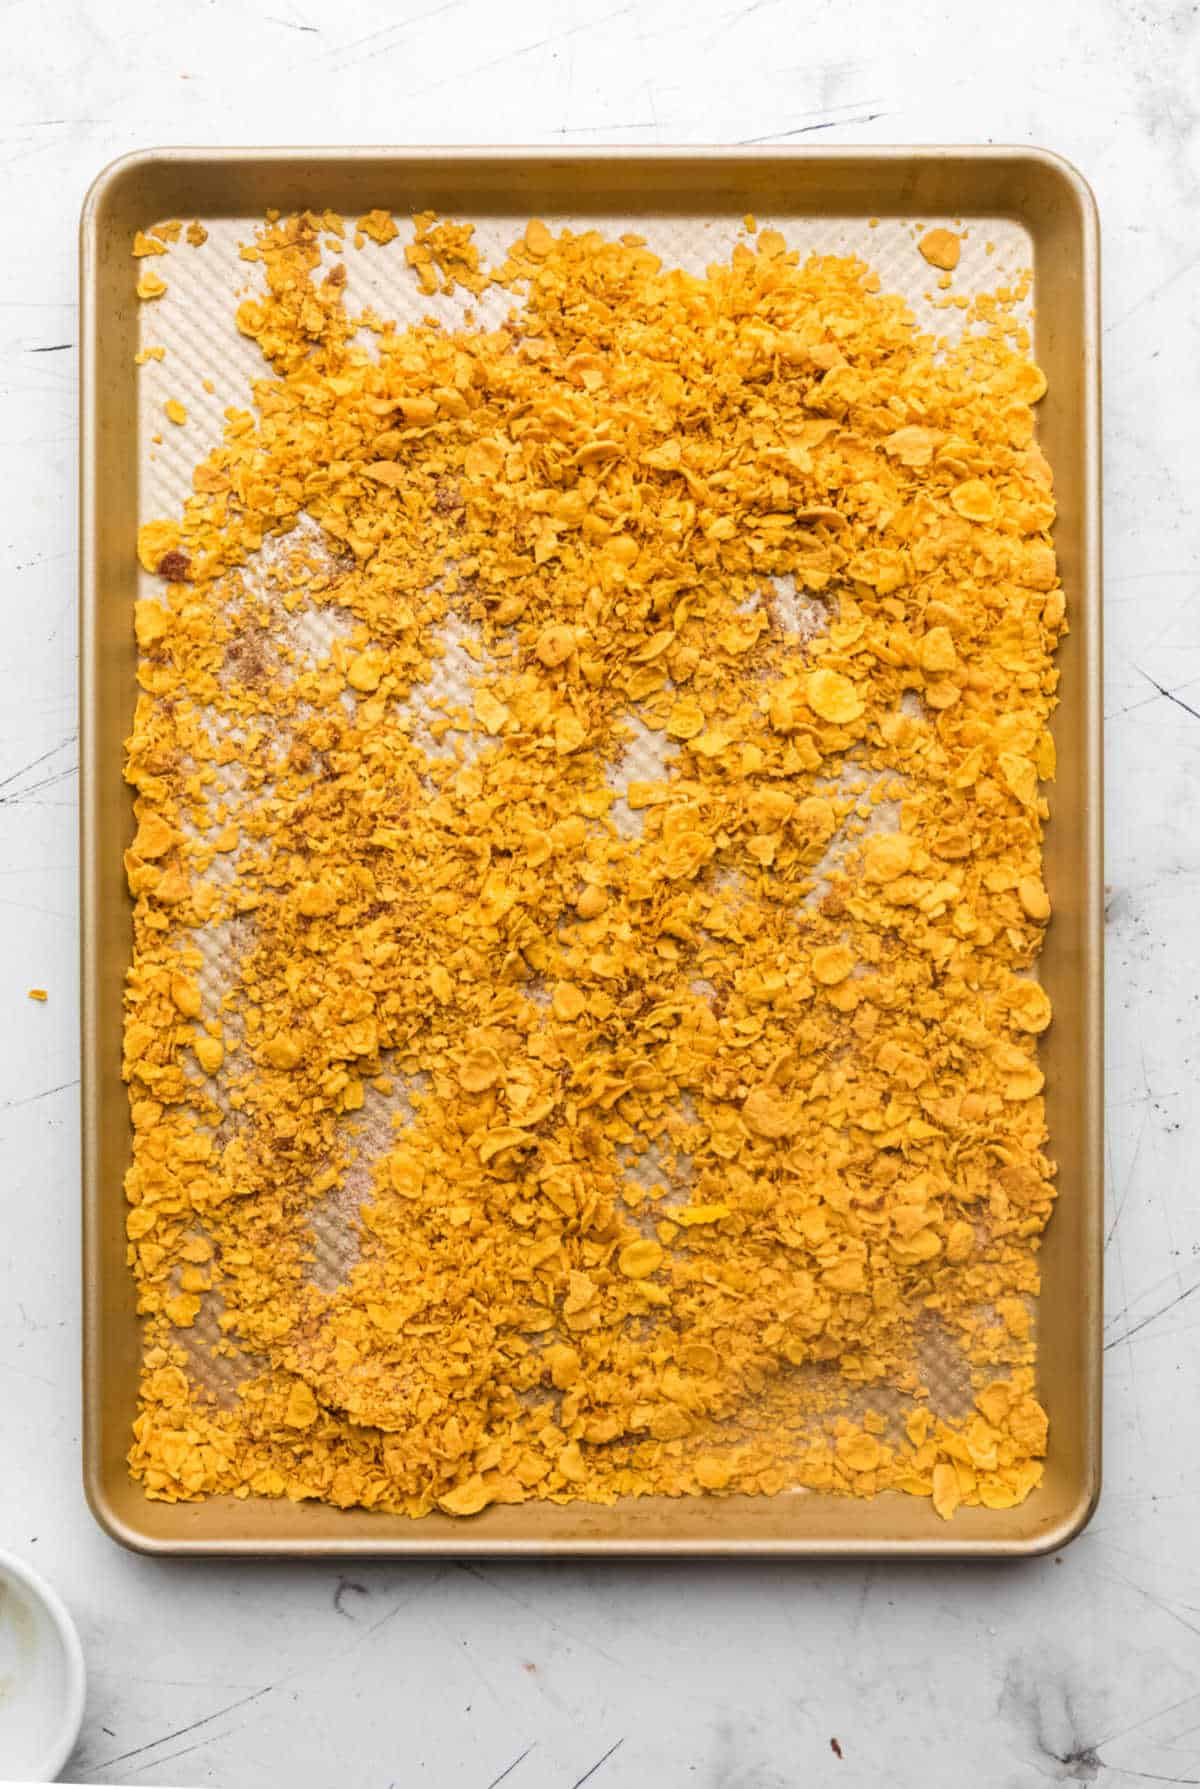 Crushed cornflakes, sugar, and cinnamon on a sheet pan.